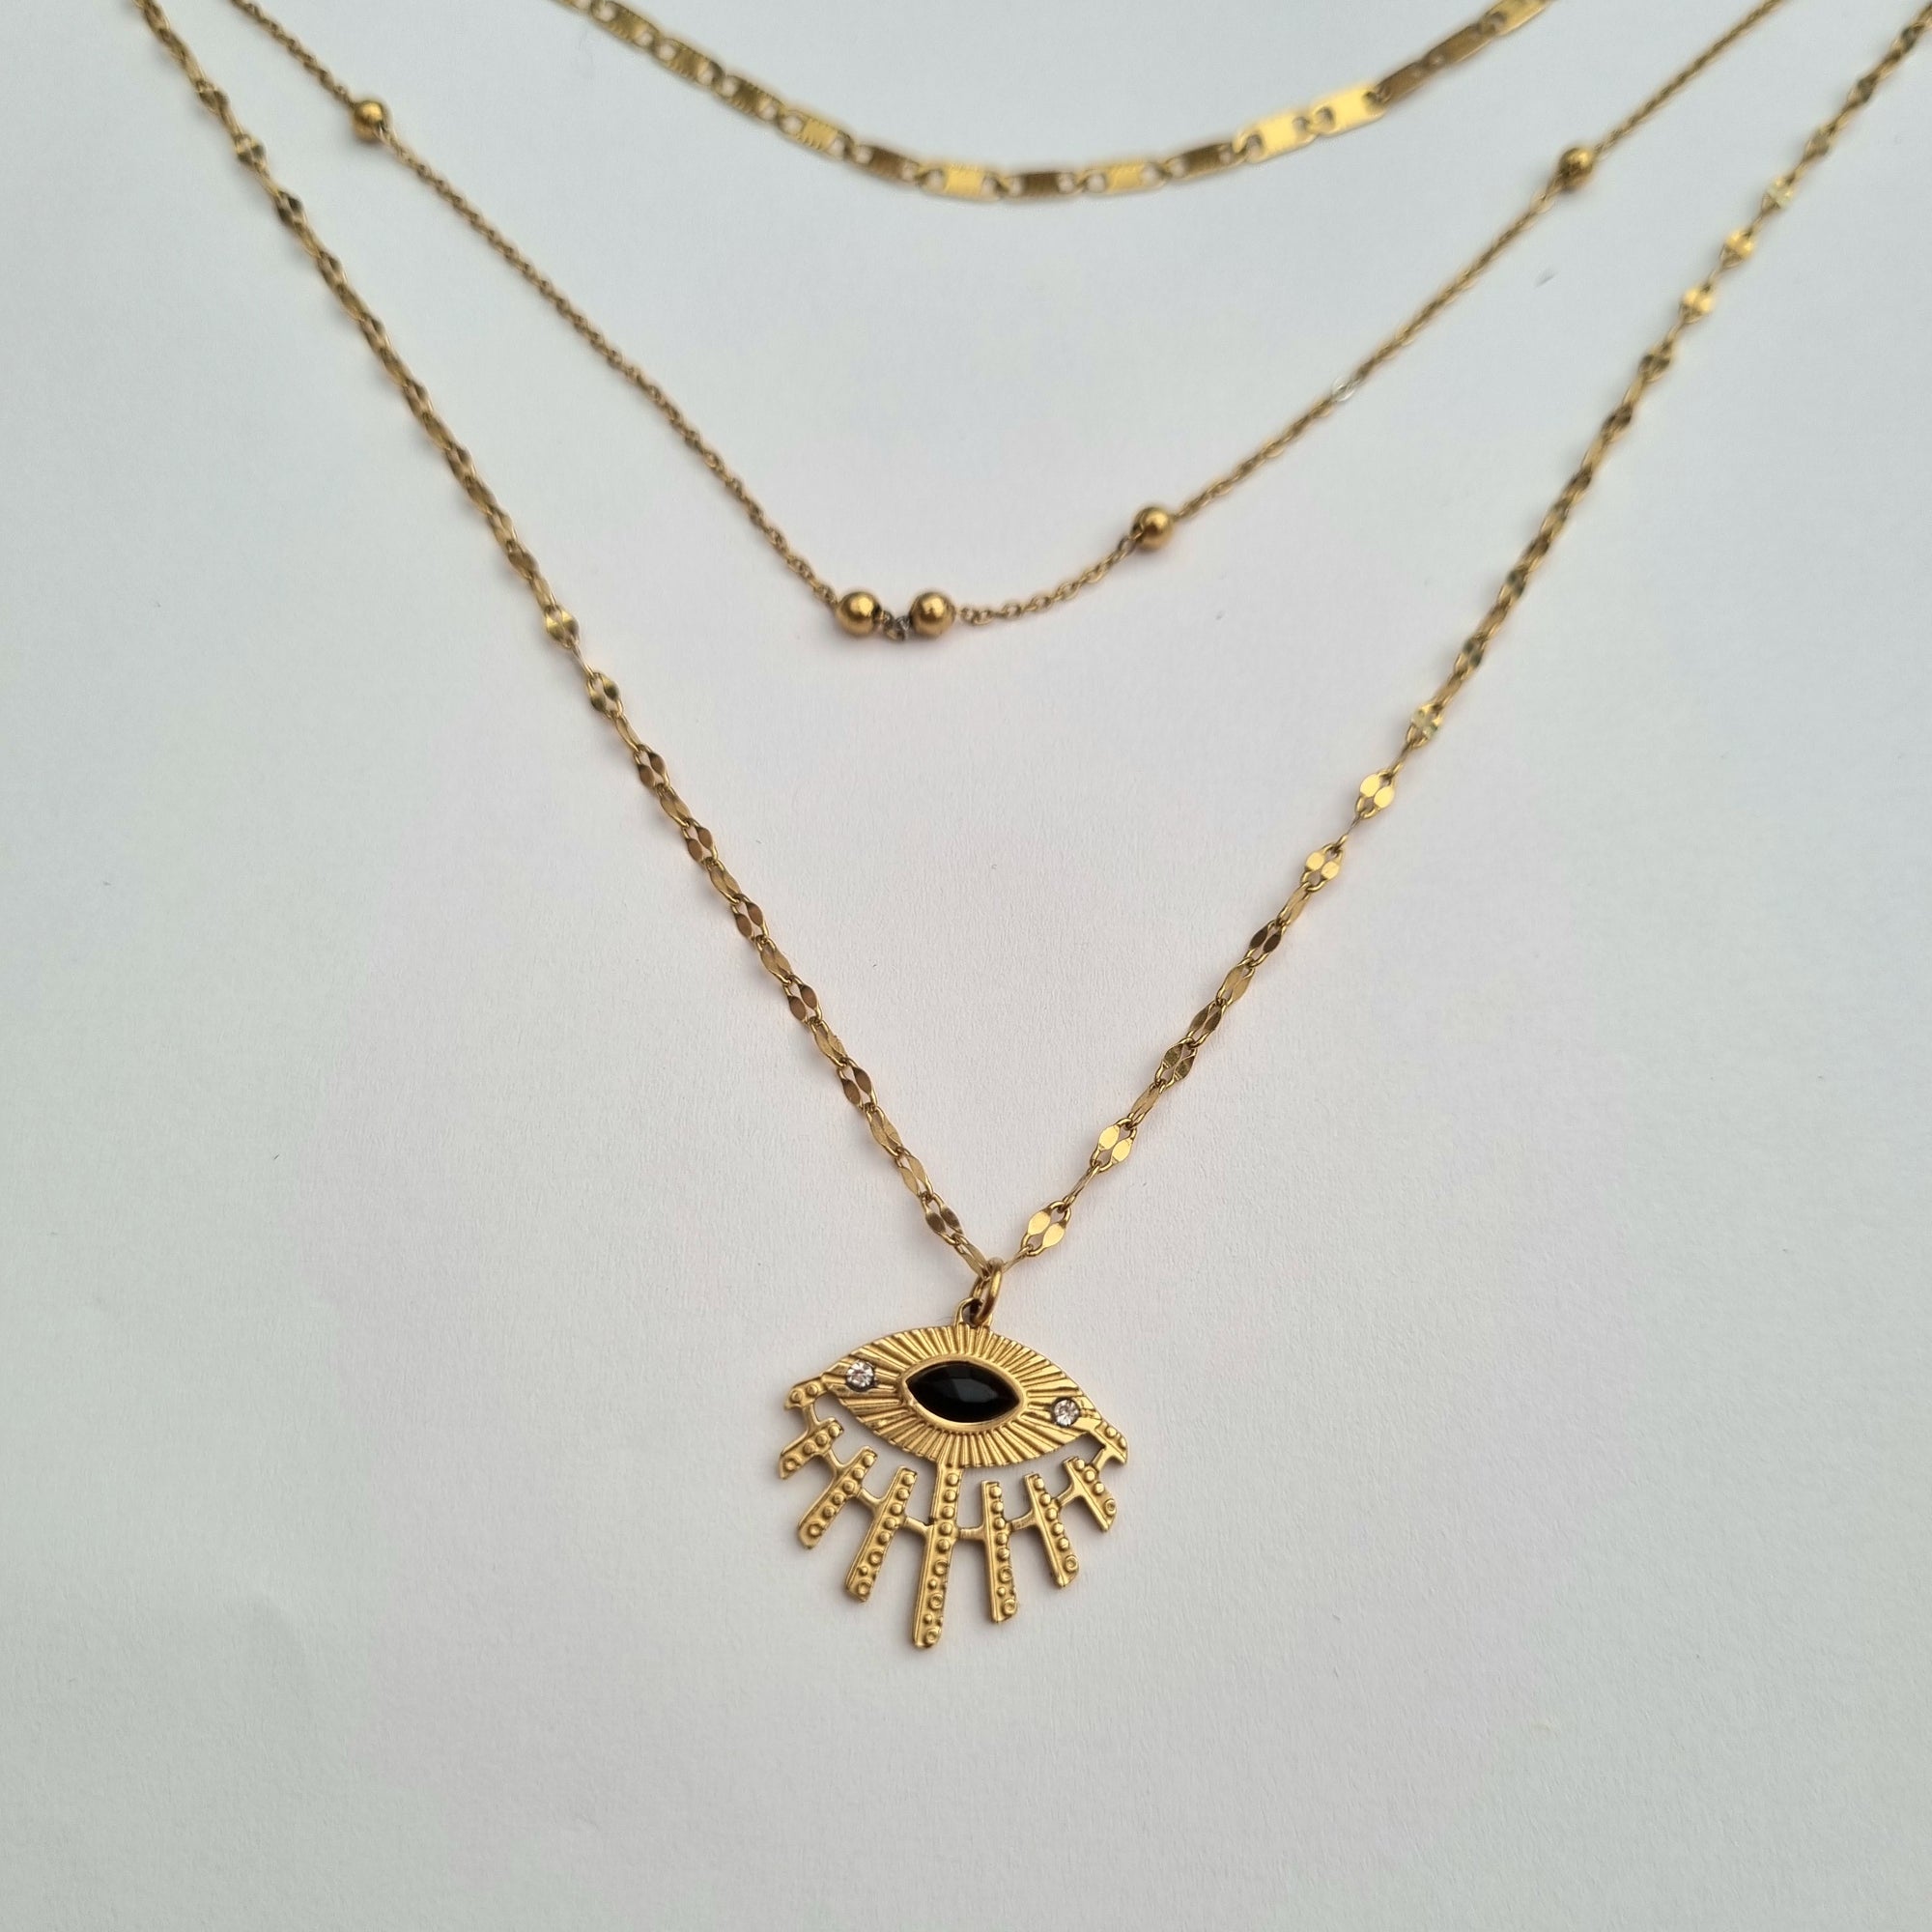 Authentic Yara necklace